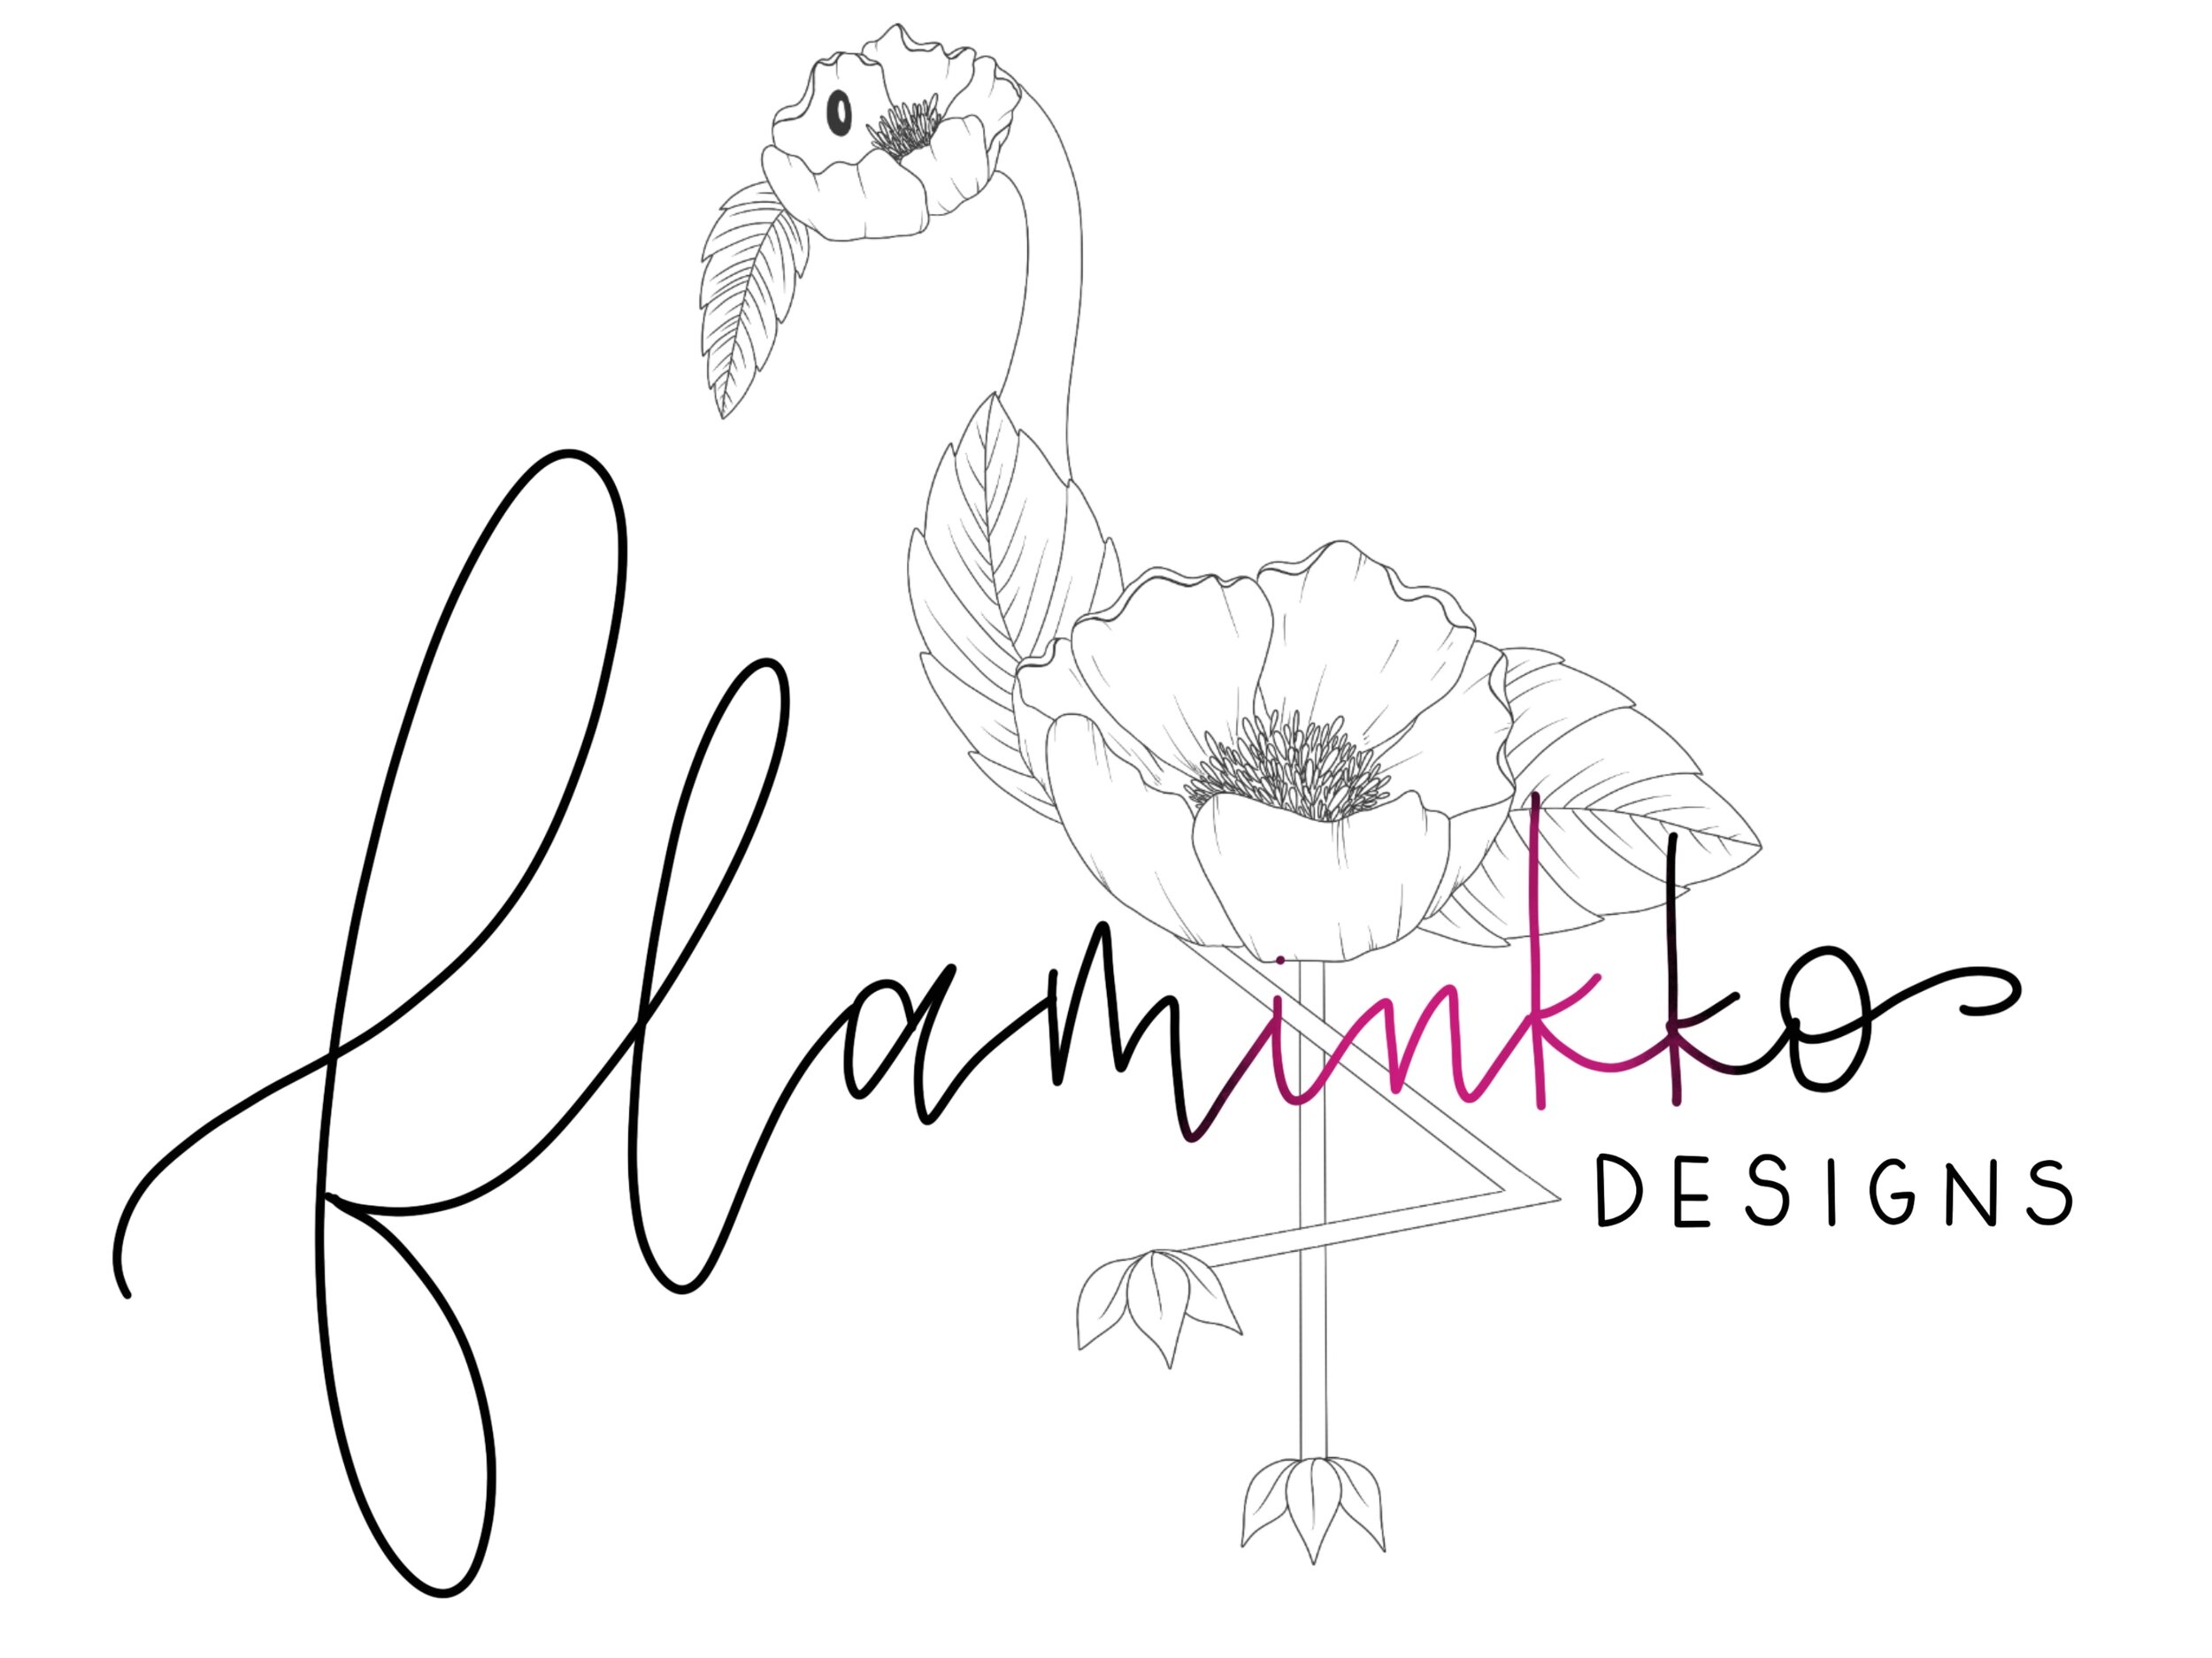 Flaminkko Designs